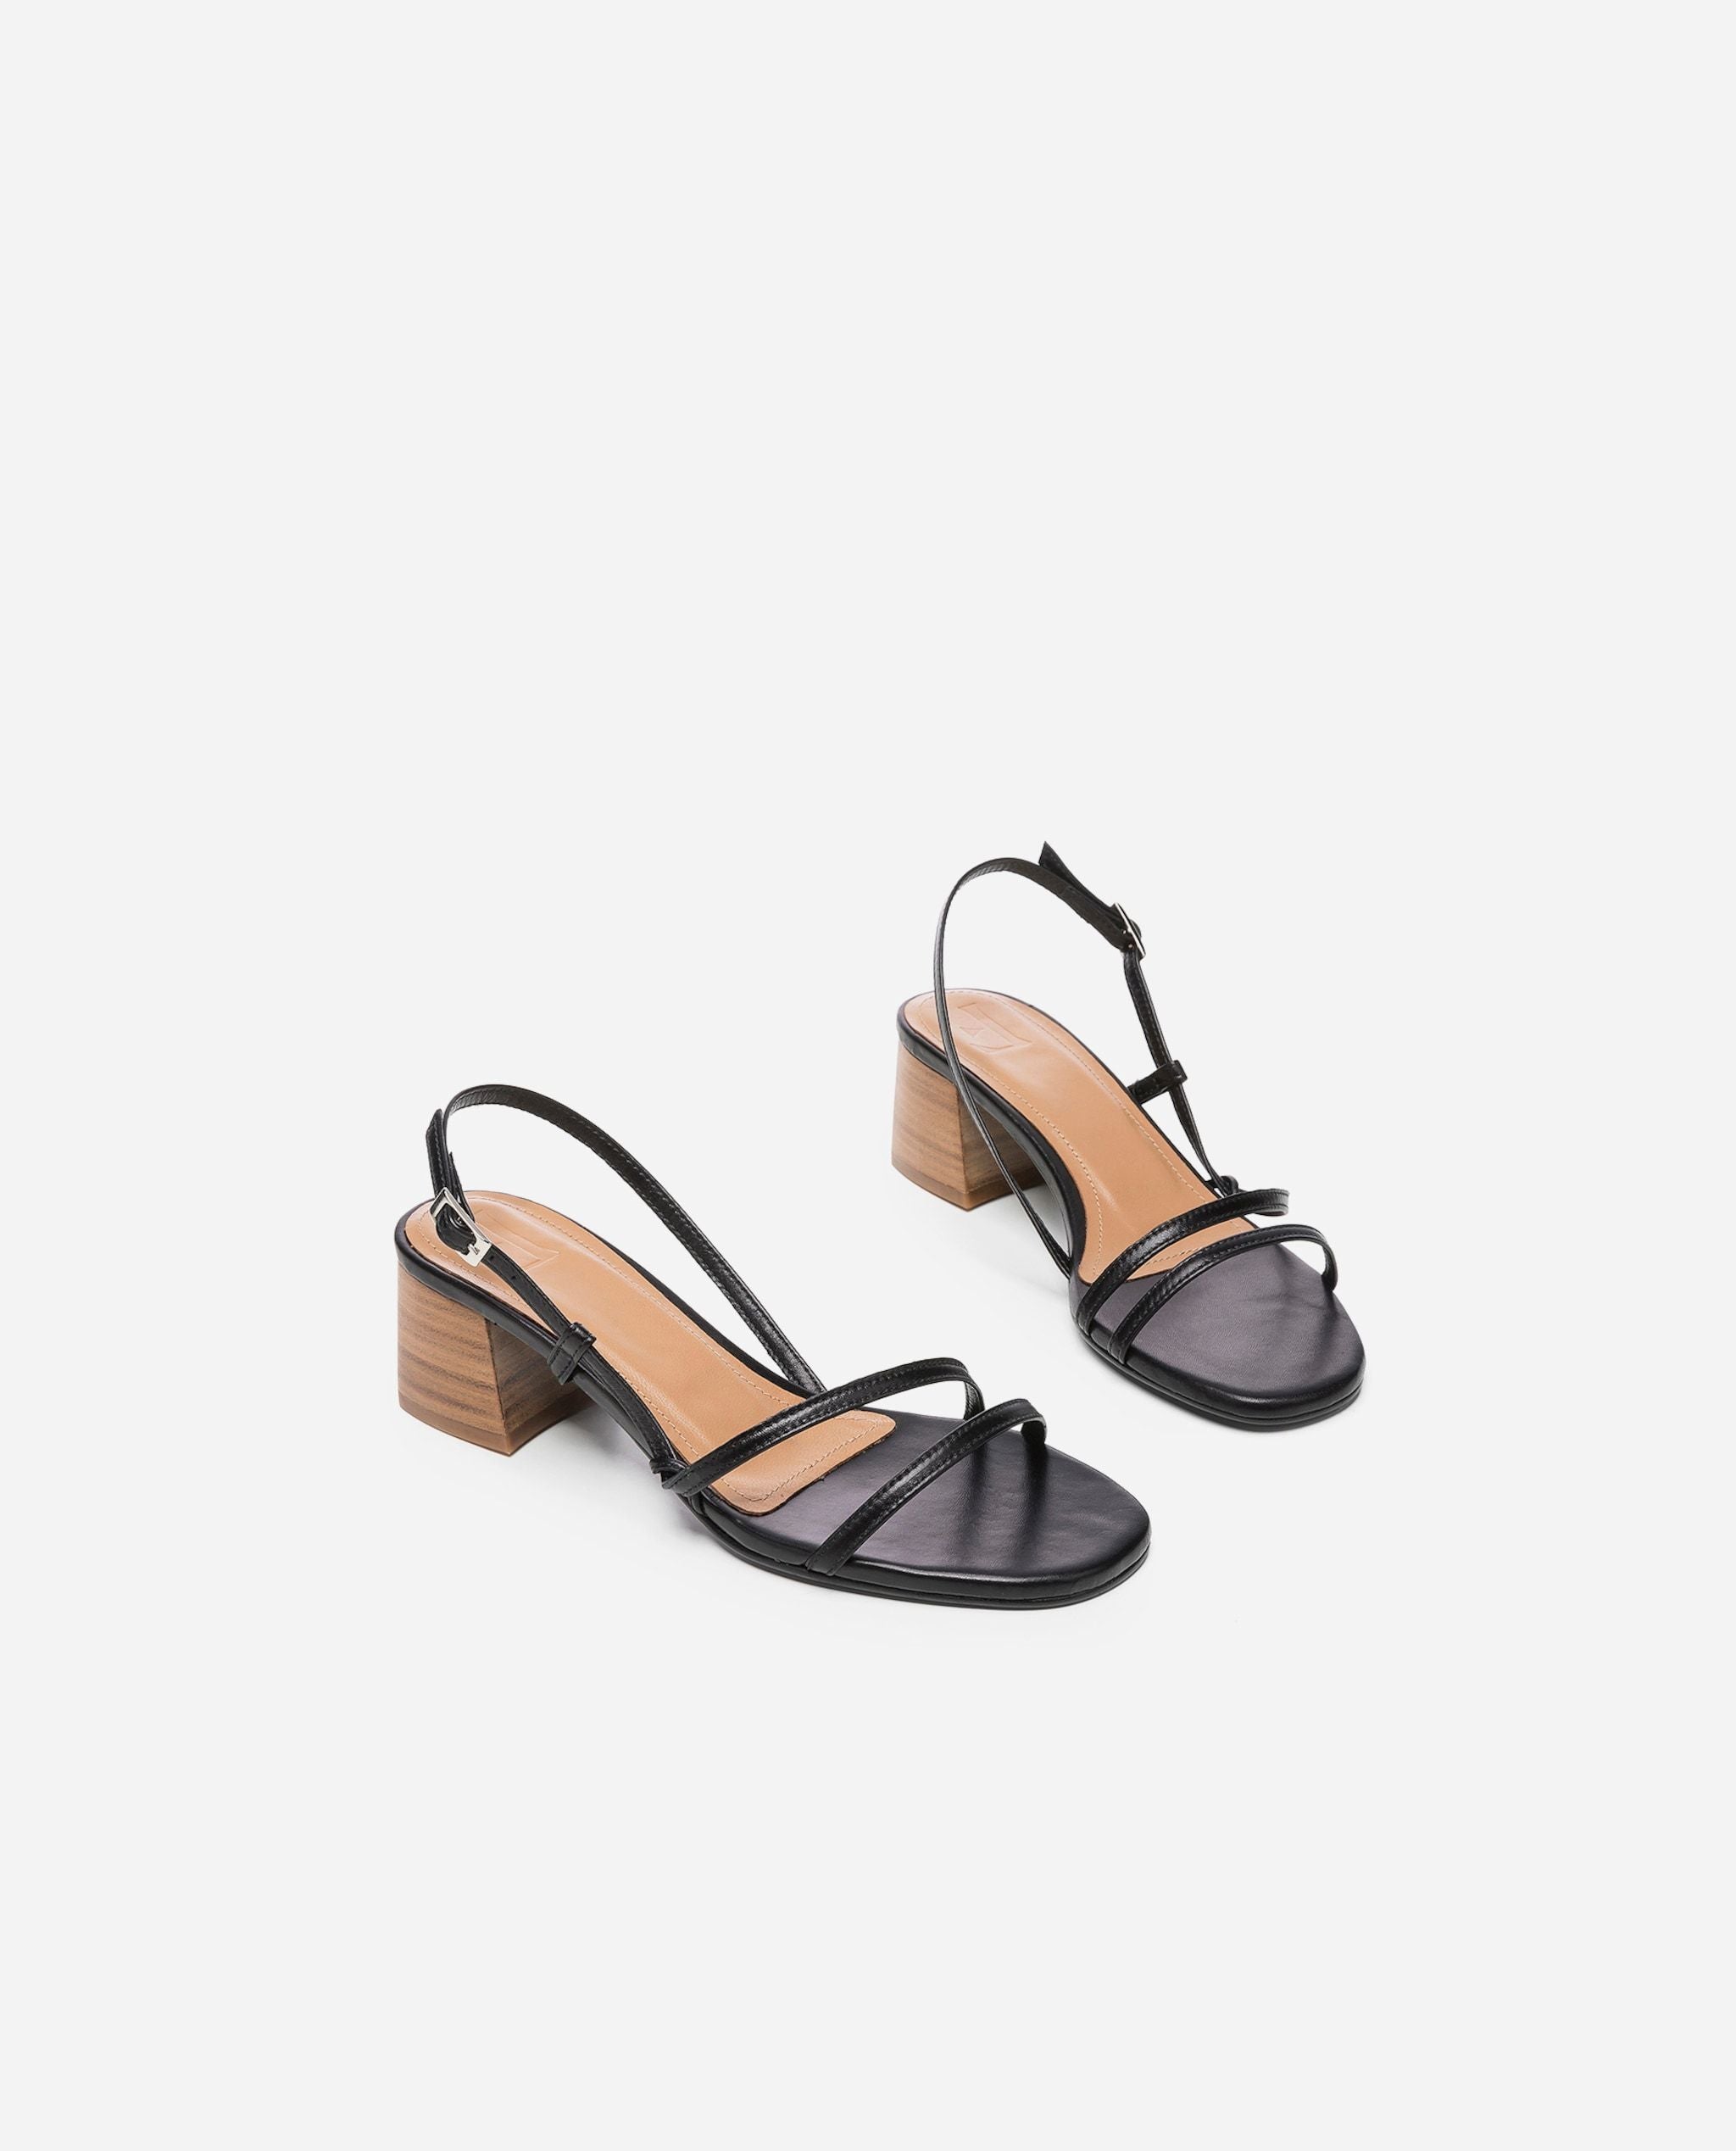 Elsa Leather Black Heeled Sandals 20010411501-001 - 3